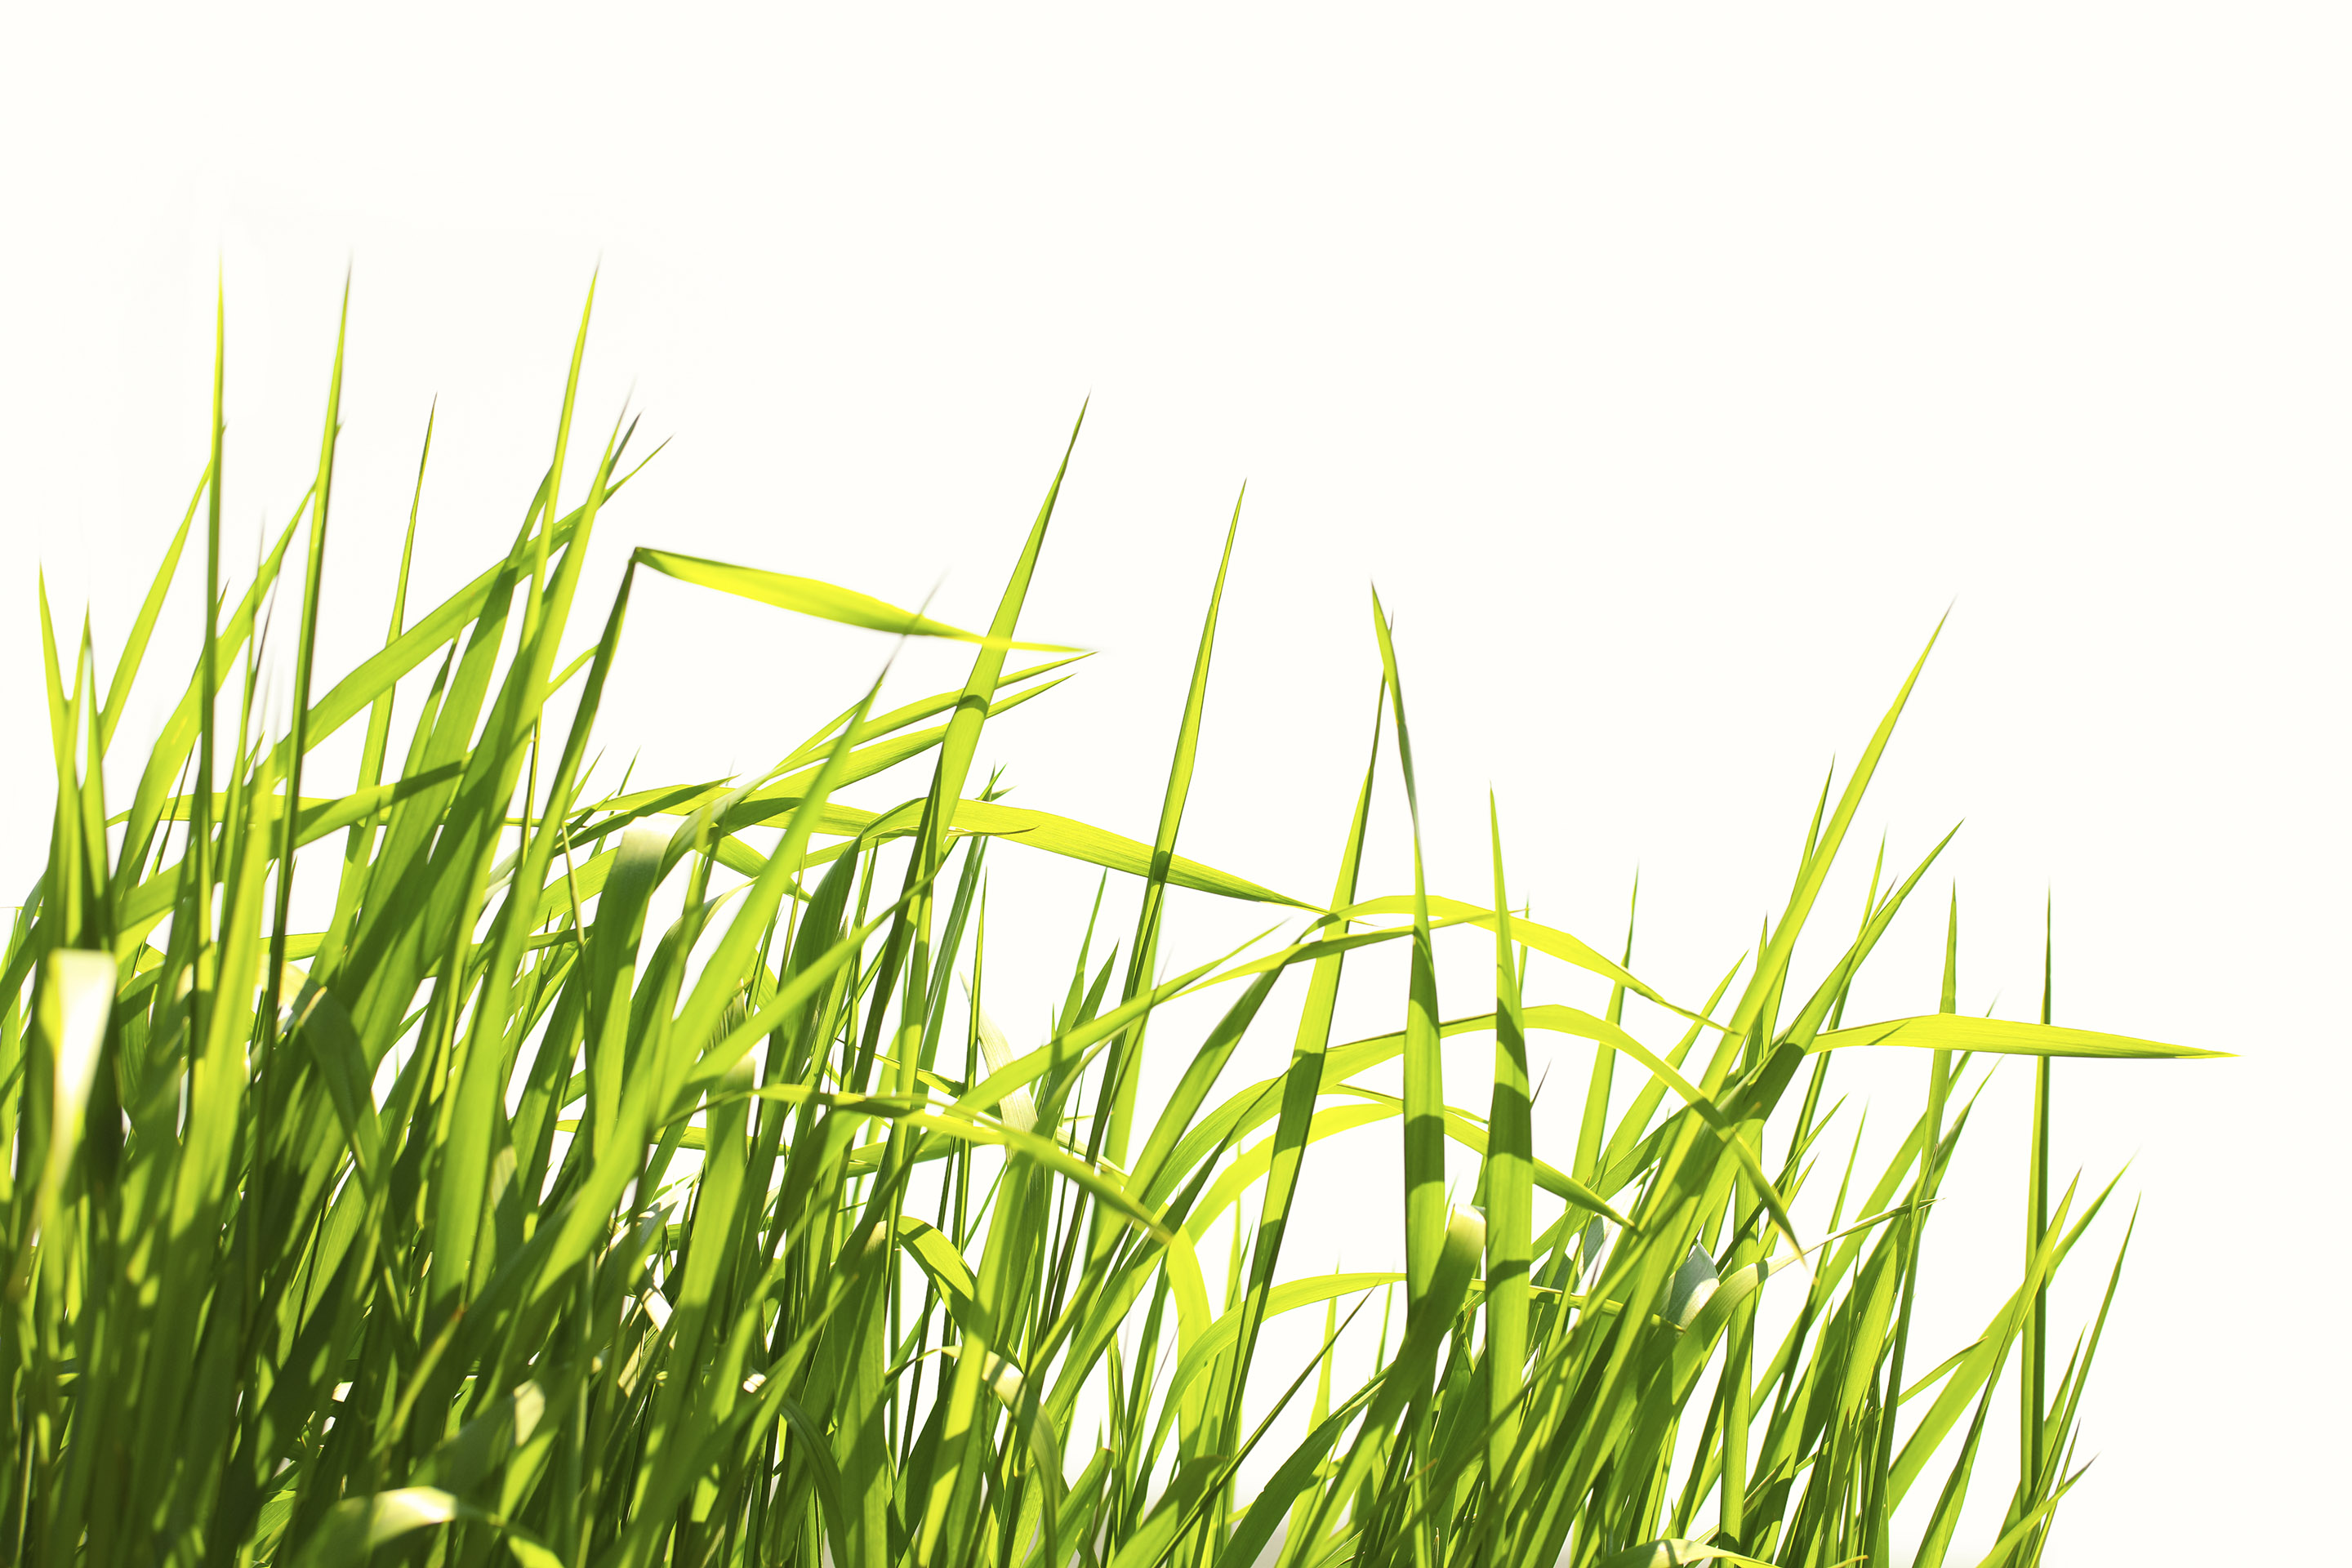 Grass against white background.